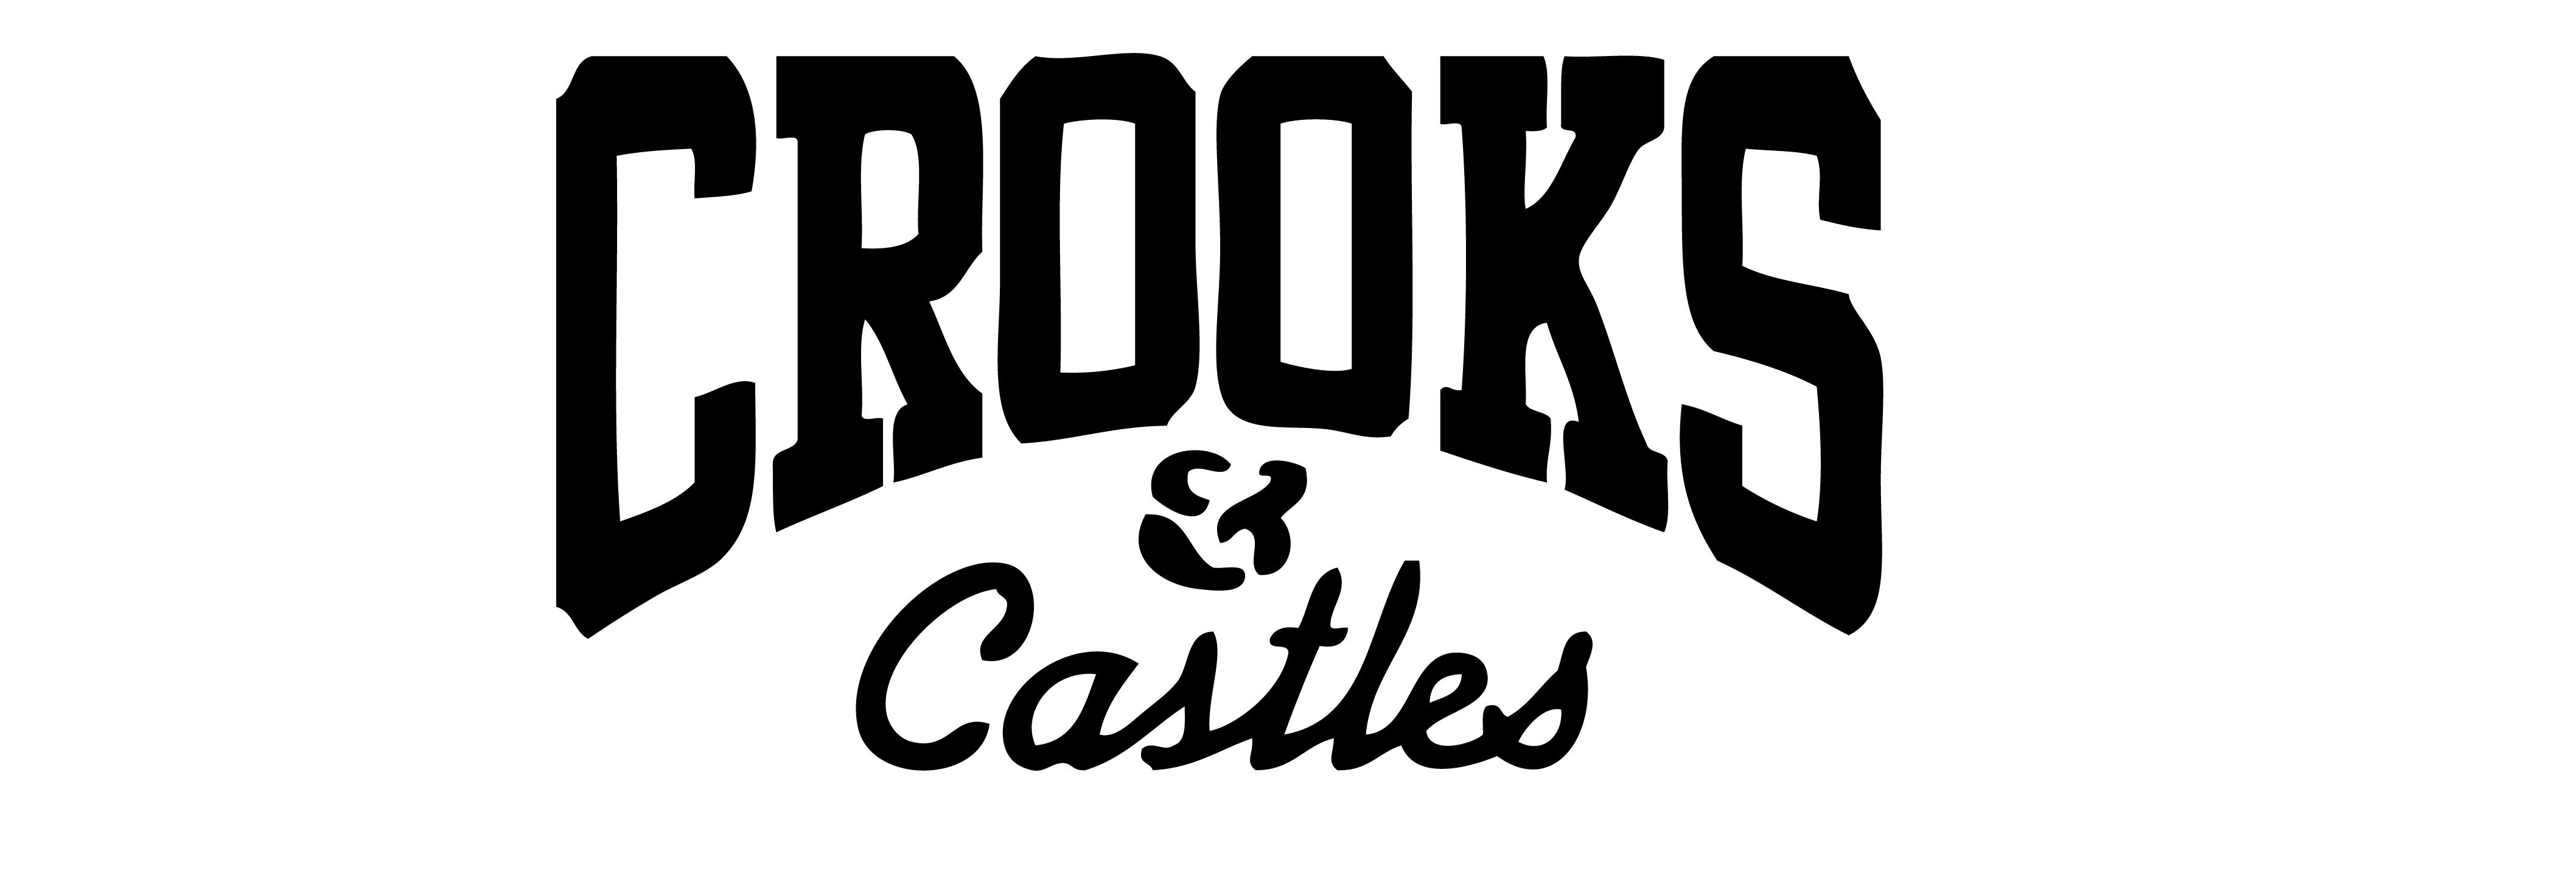 Crooks and Castles Logo - CROOKS CASTLES LOGO Psd50234 (2) Liquidation. Vancouver